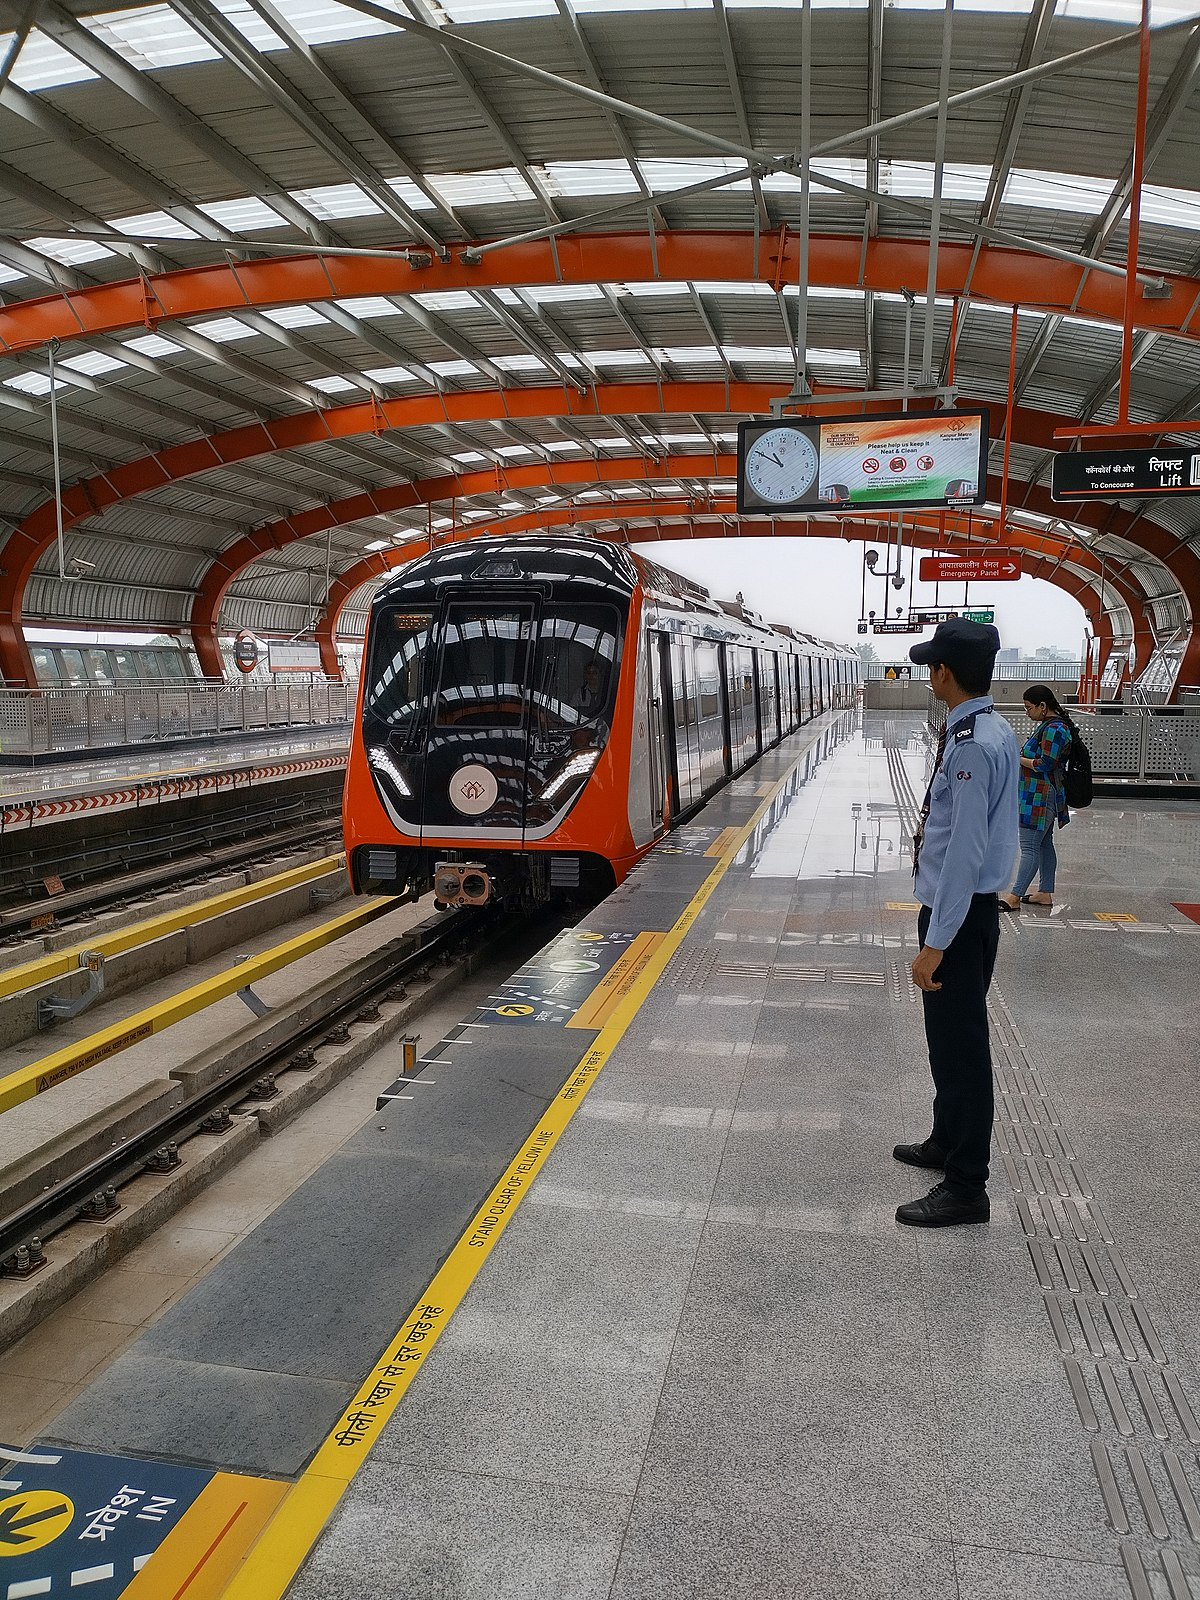 bhopal metro